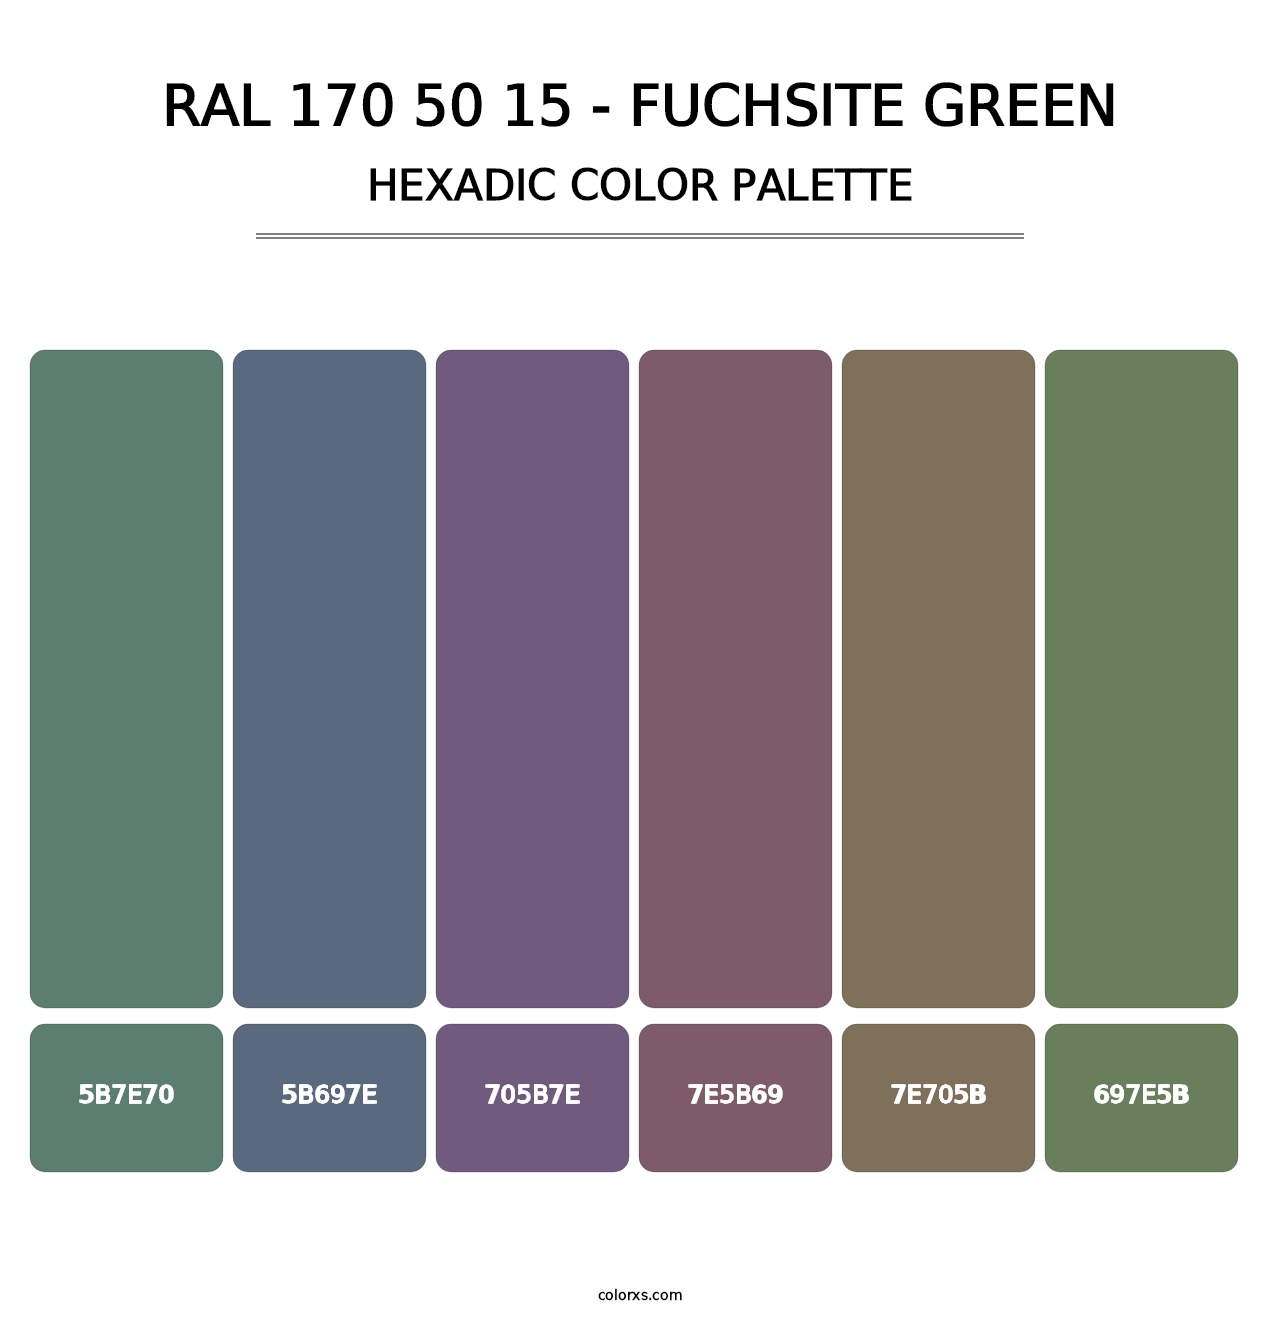 RAL 170 50 15 - Fuchsite Green - Hexadic Color Palette